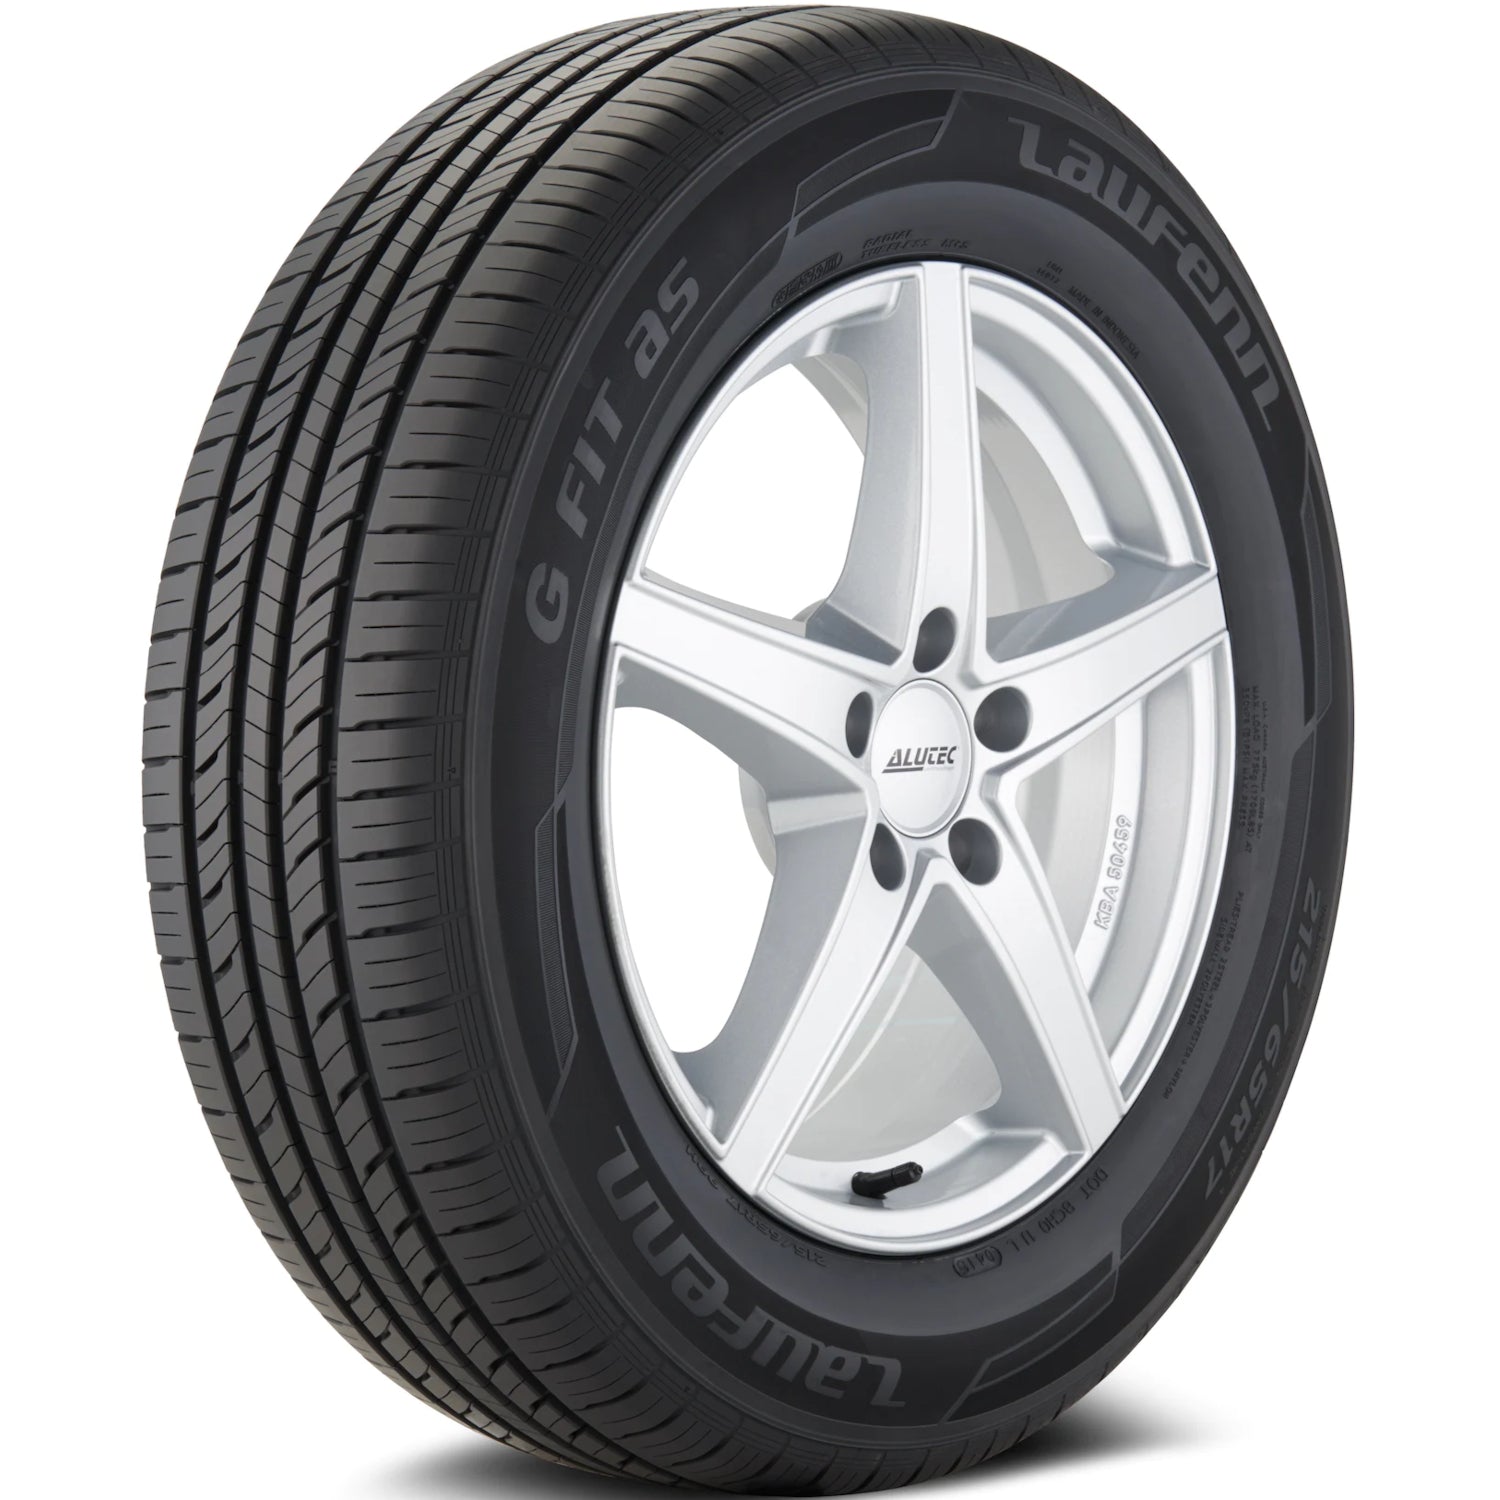 LAUFENN G FIT AS 195/55R15 (23.4X7.7R 15) Tires